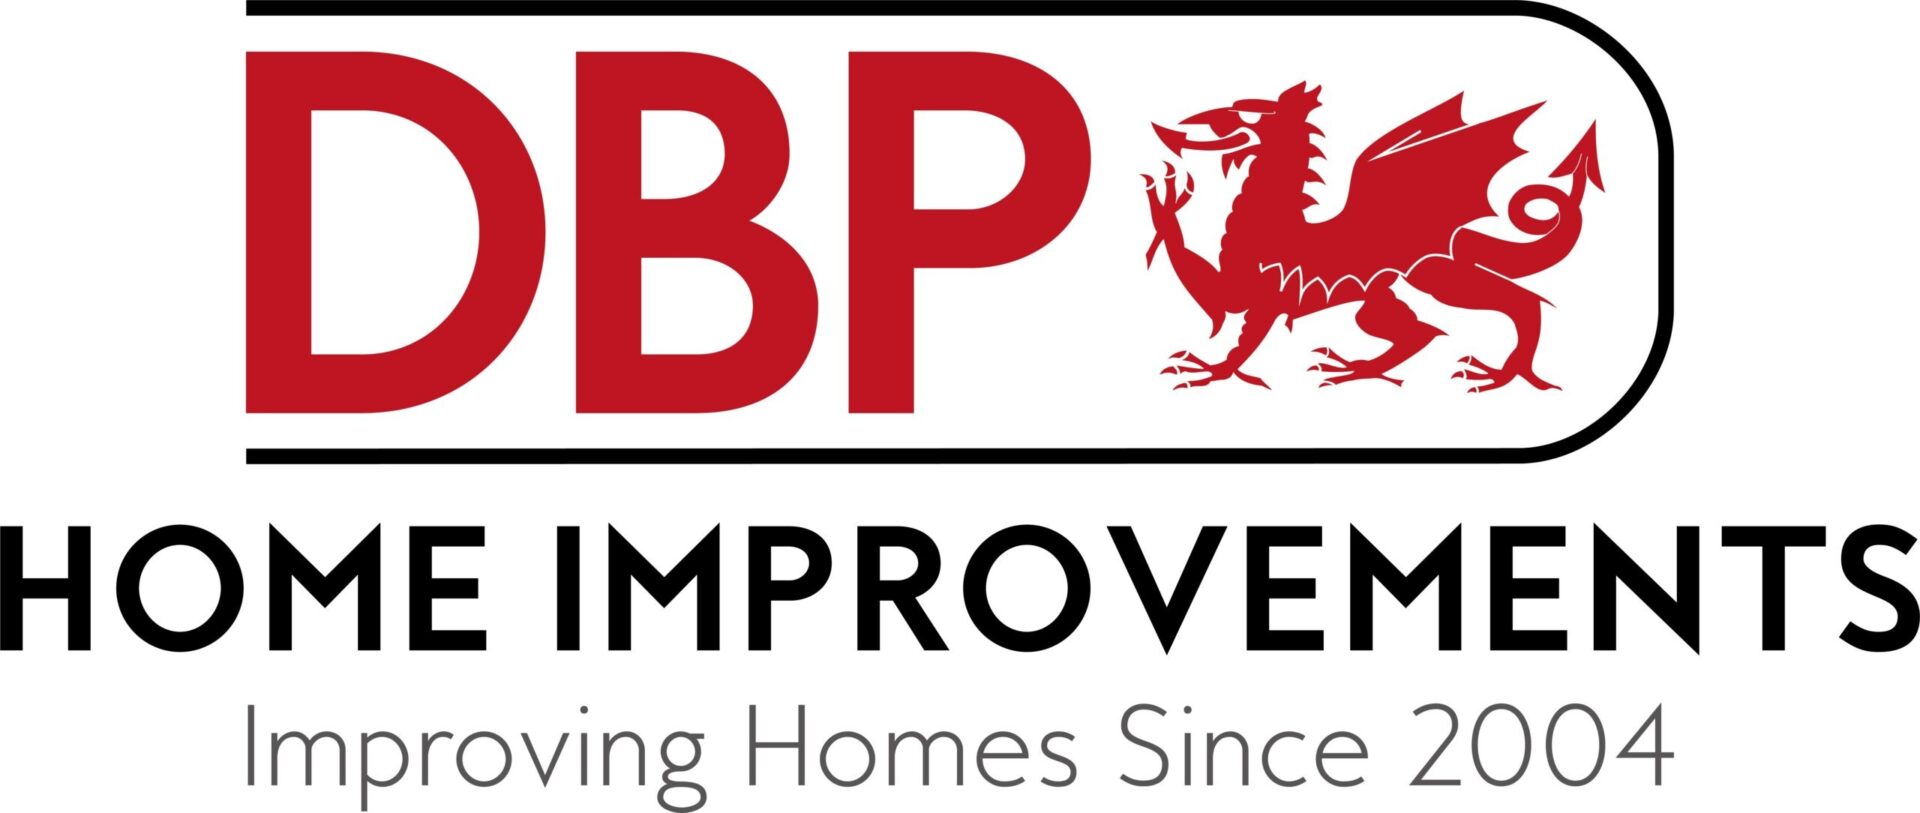 DBP Logo